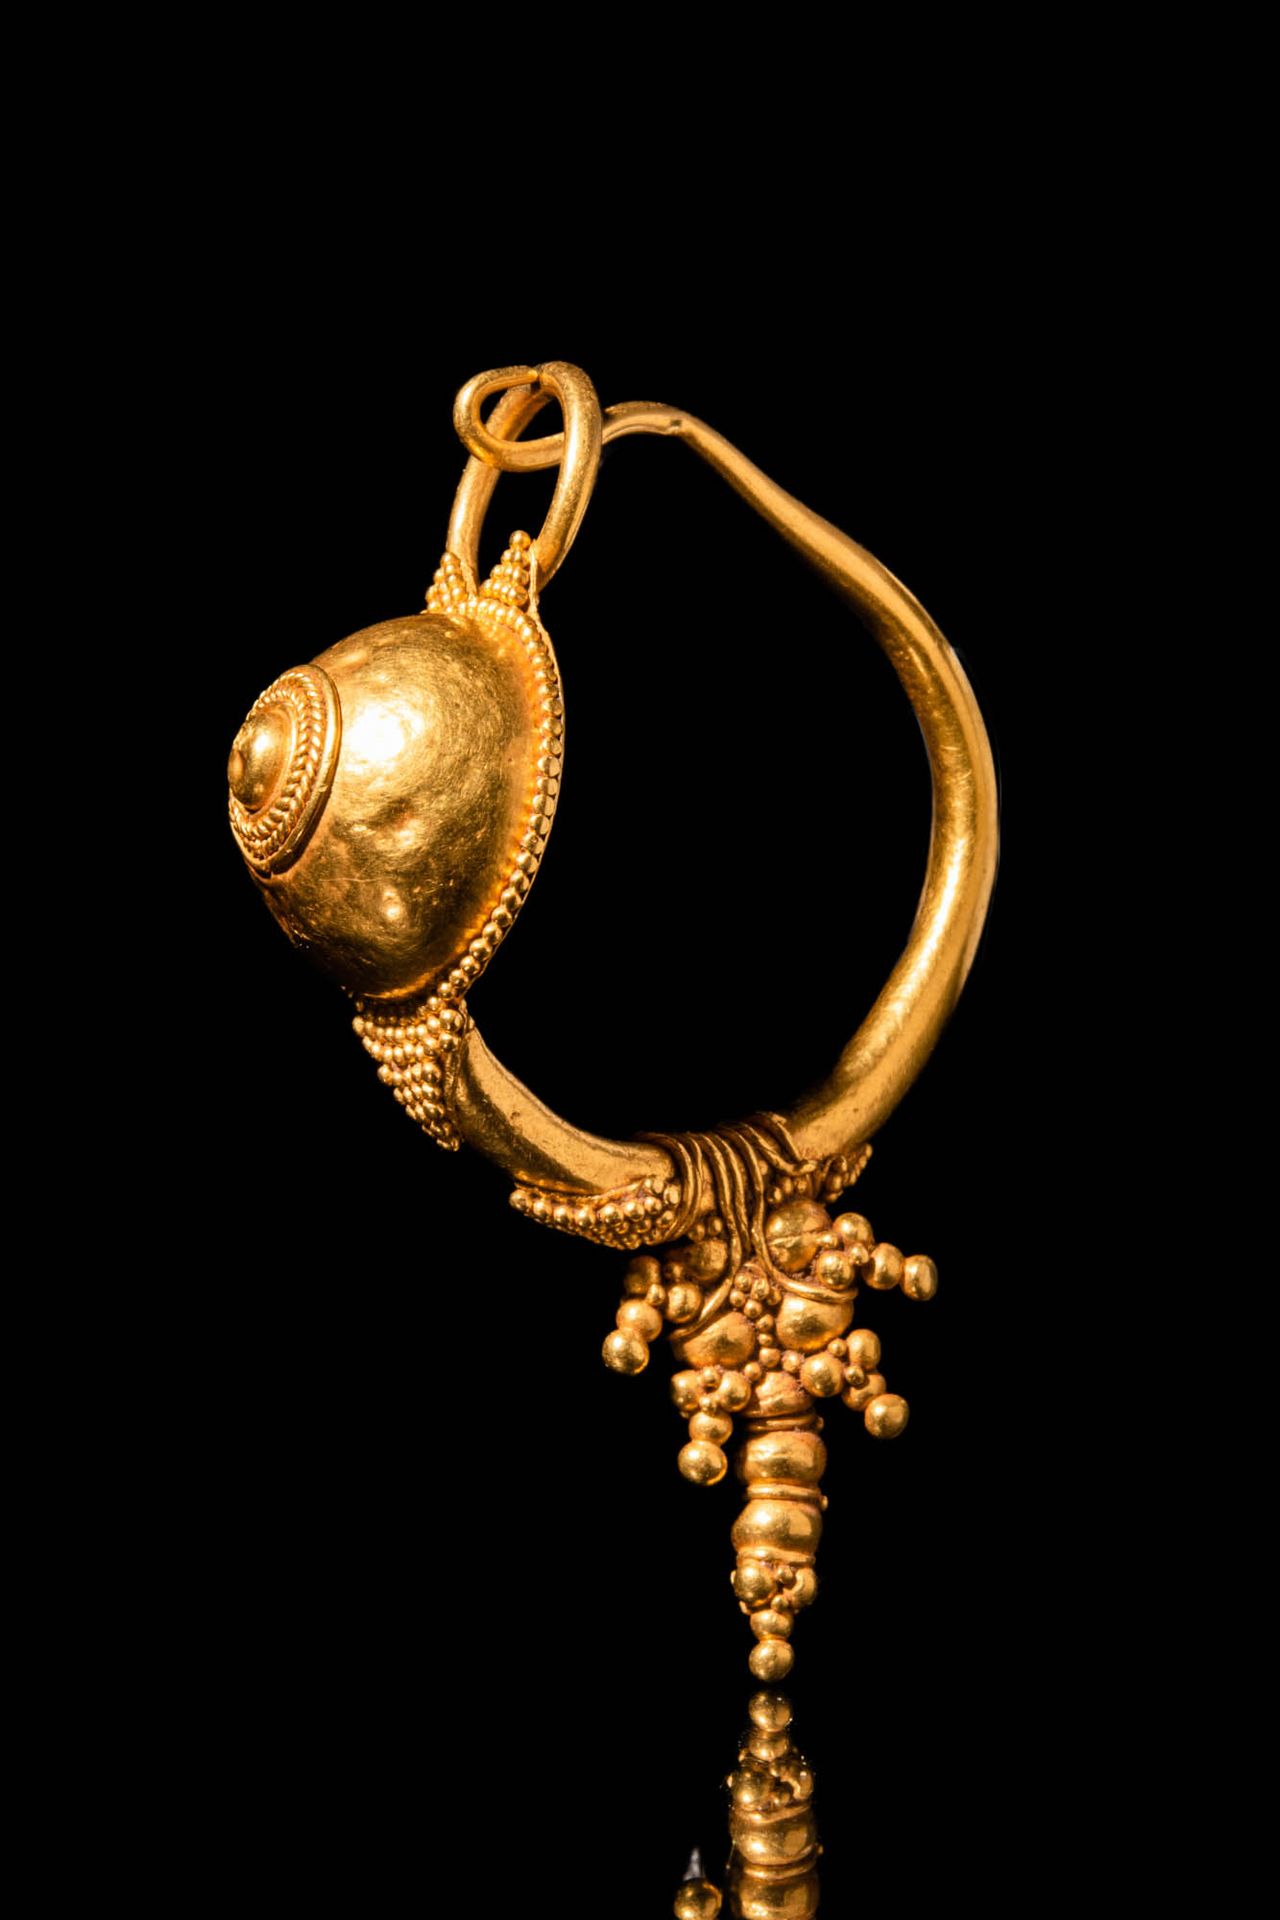 MASSIVE ROMAN GOLD UMBO EARRING - 22 GRAMS Ca. 200 - 300 D.C.
Gran pendiente rom&hellip;